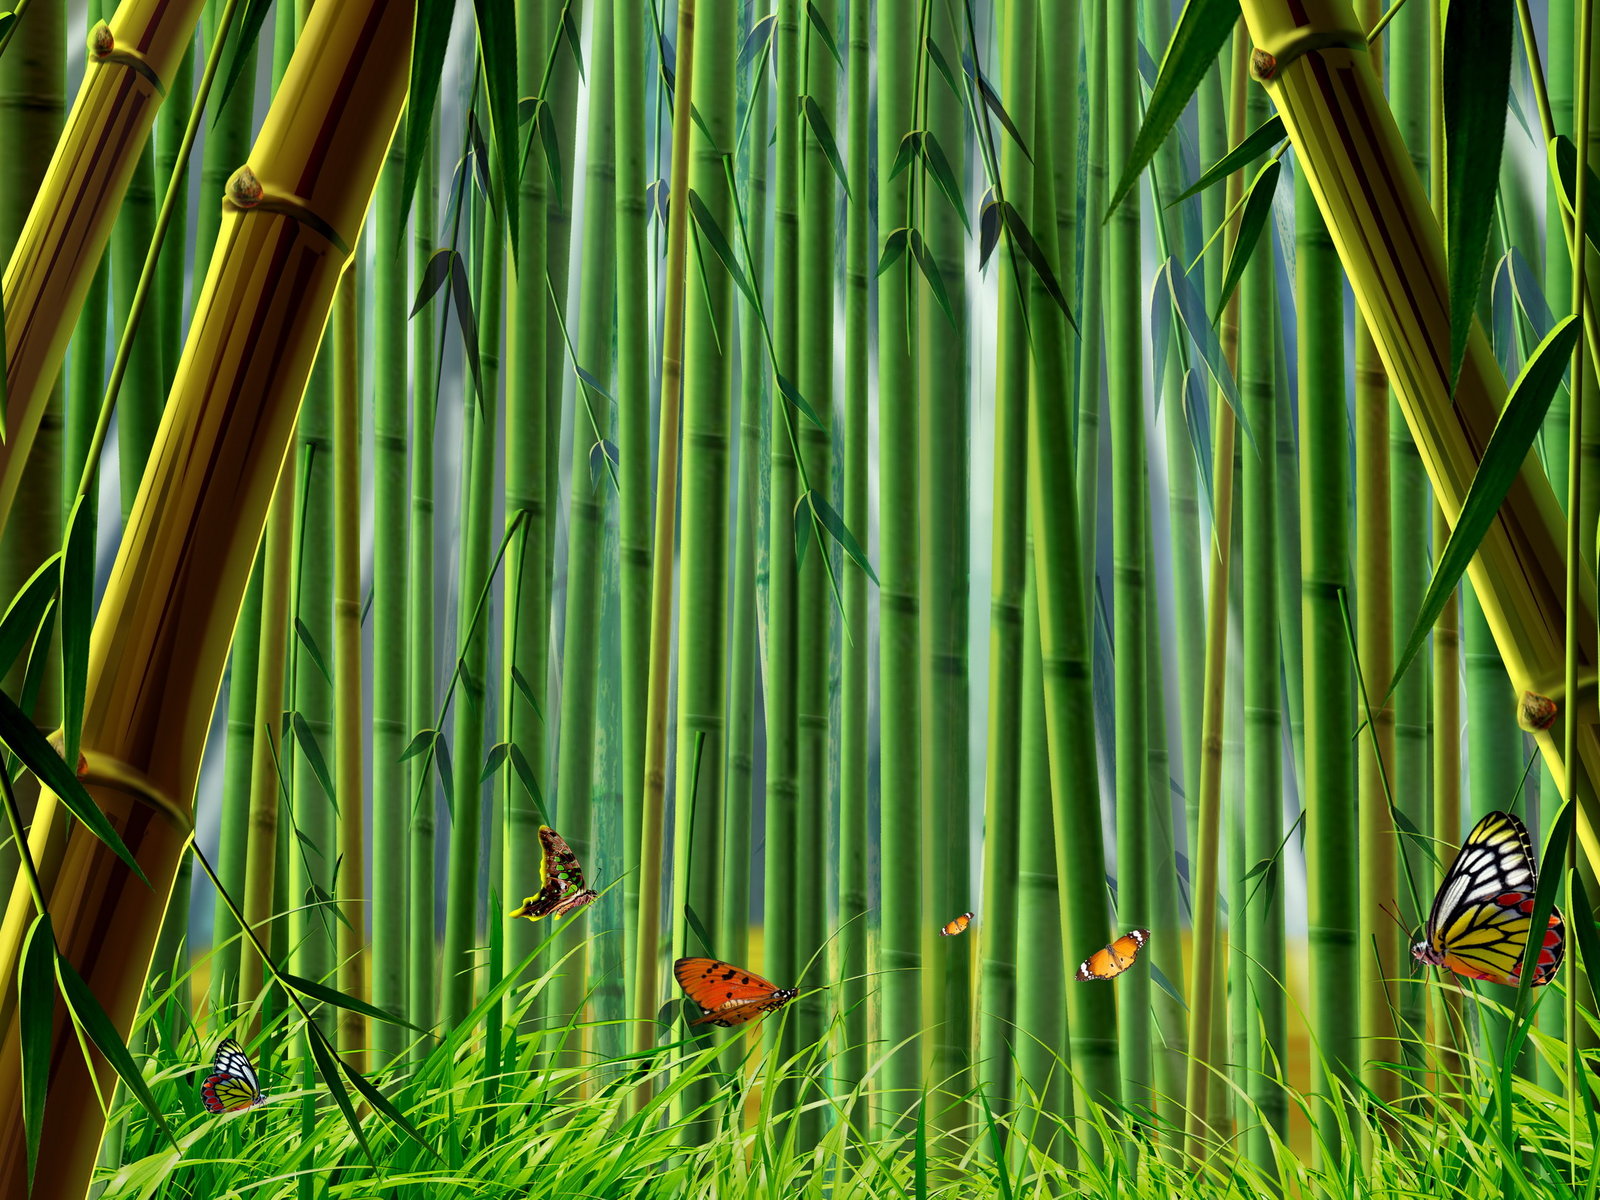 Bamboo Wallpaper Bamboo Wallpapers Collection 20 30 Afalchi Free images wallpape [afalchi.blogspot.com]